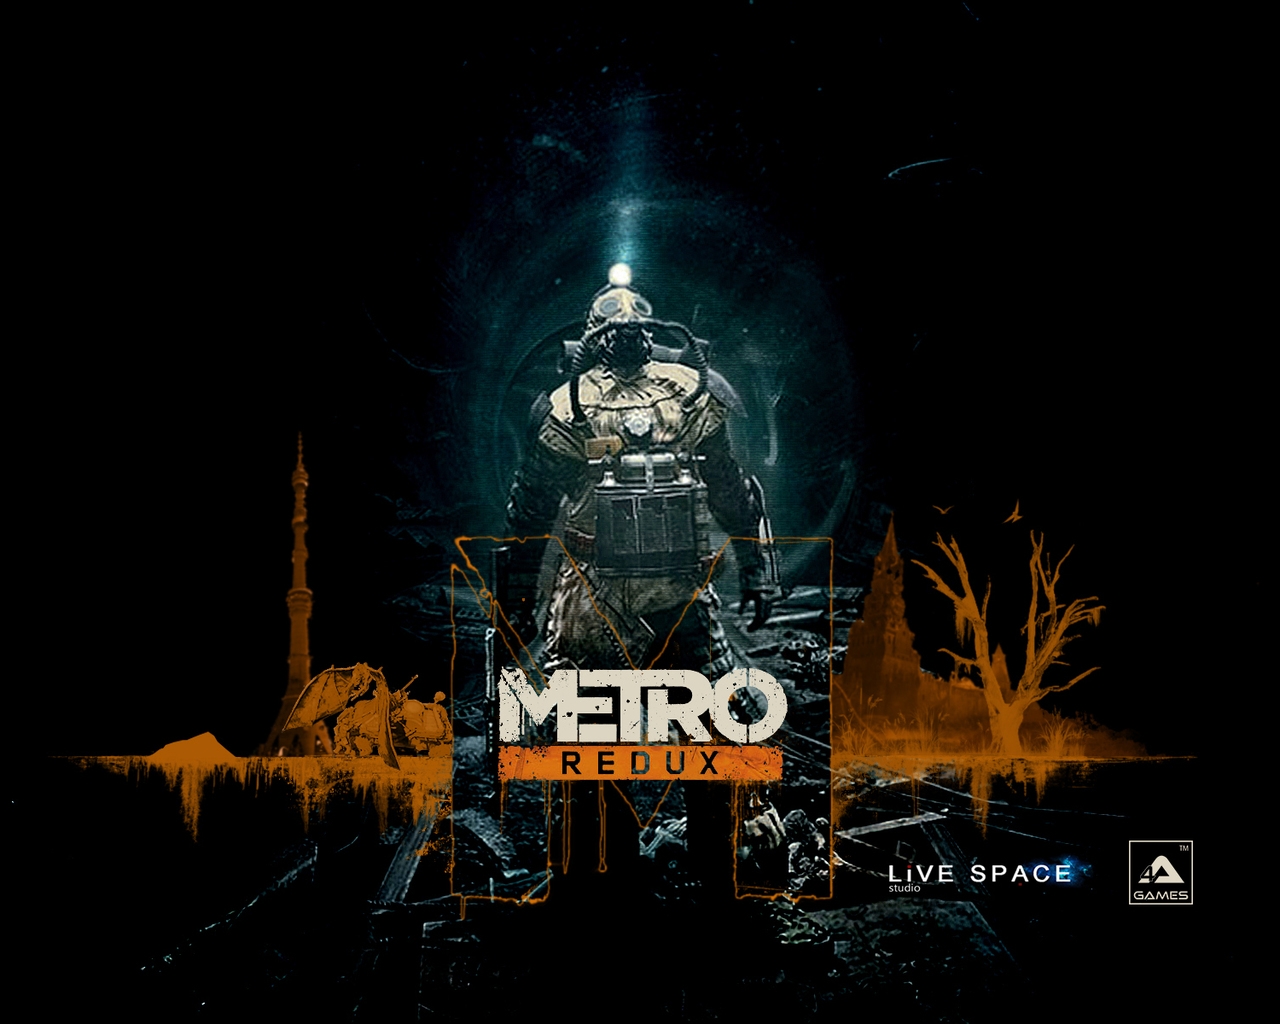 Metro Redux for 1280 x 1024 resolution